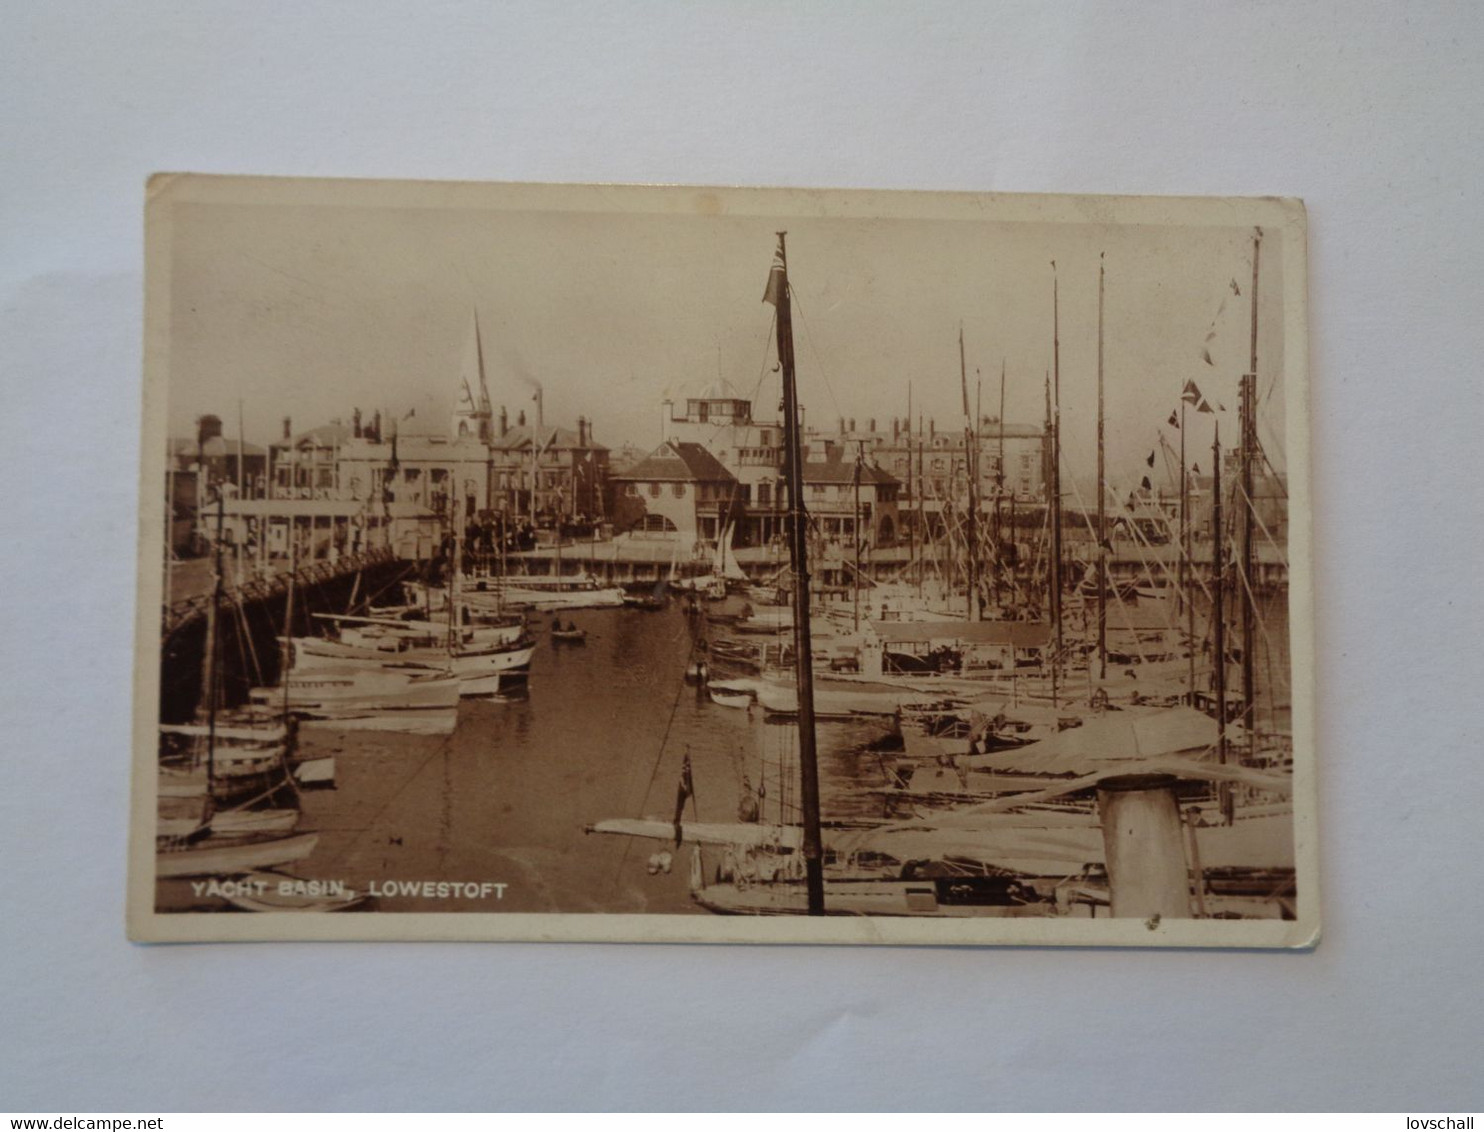 Lowestoft. - Yacht Basin. (26 - 8 - 1925) - Lowestoft